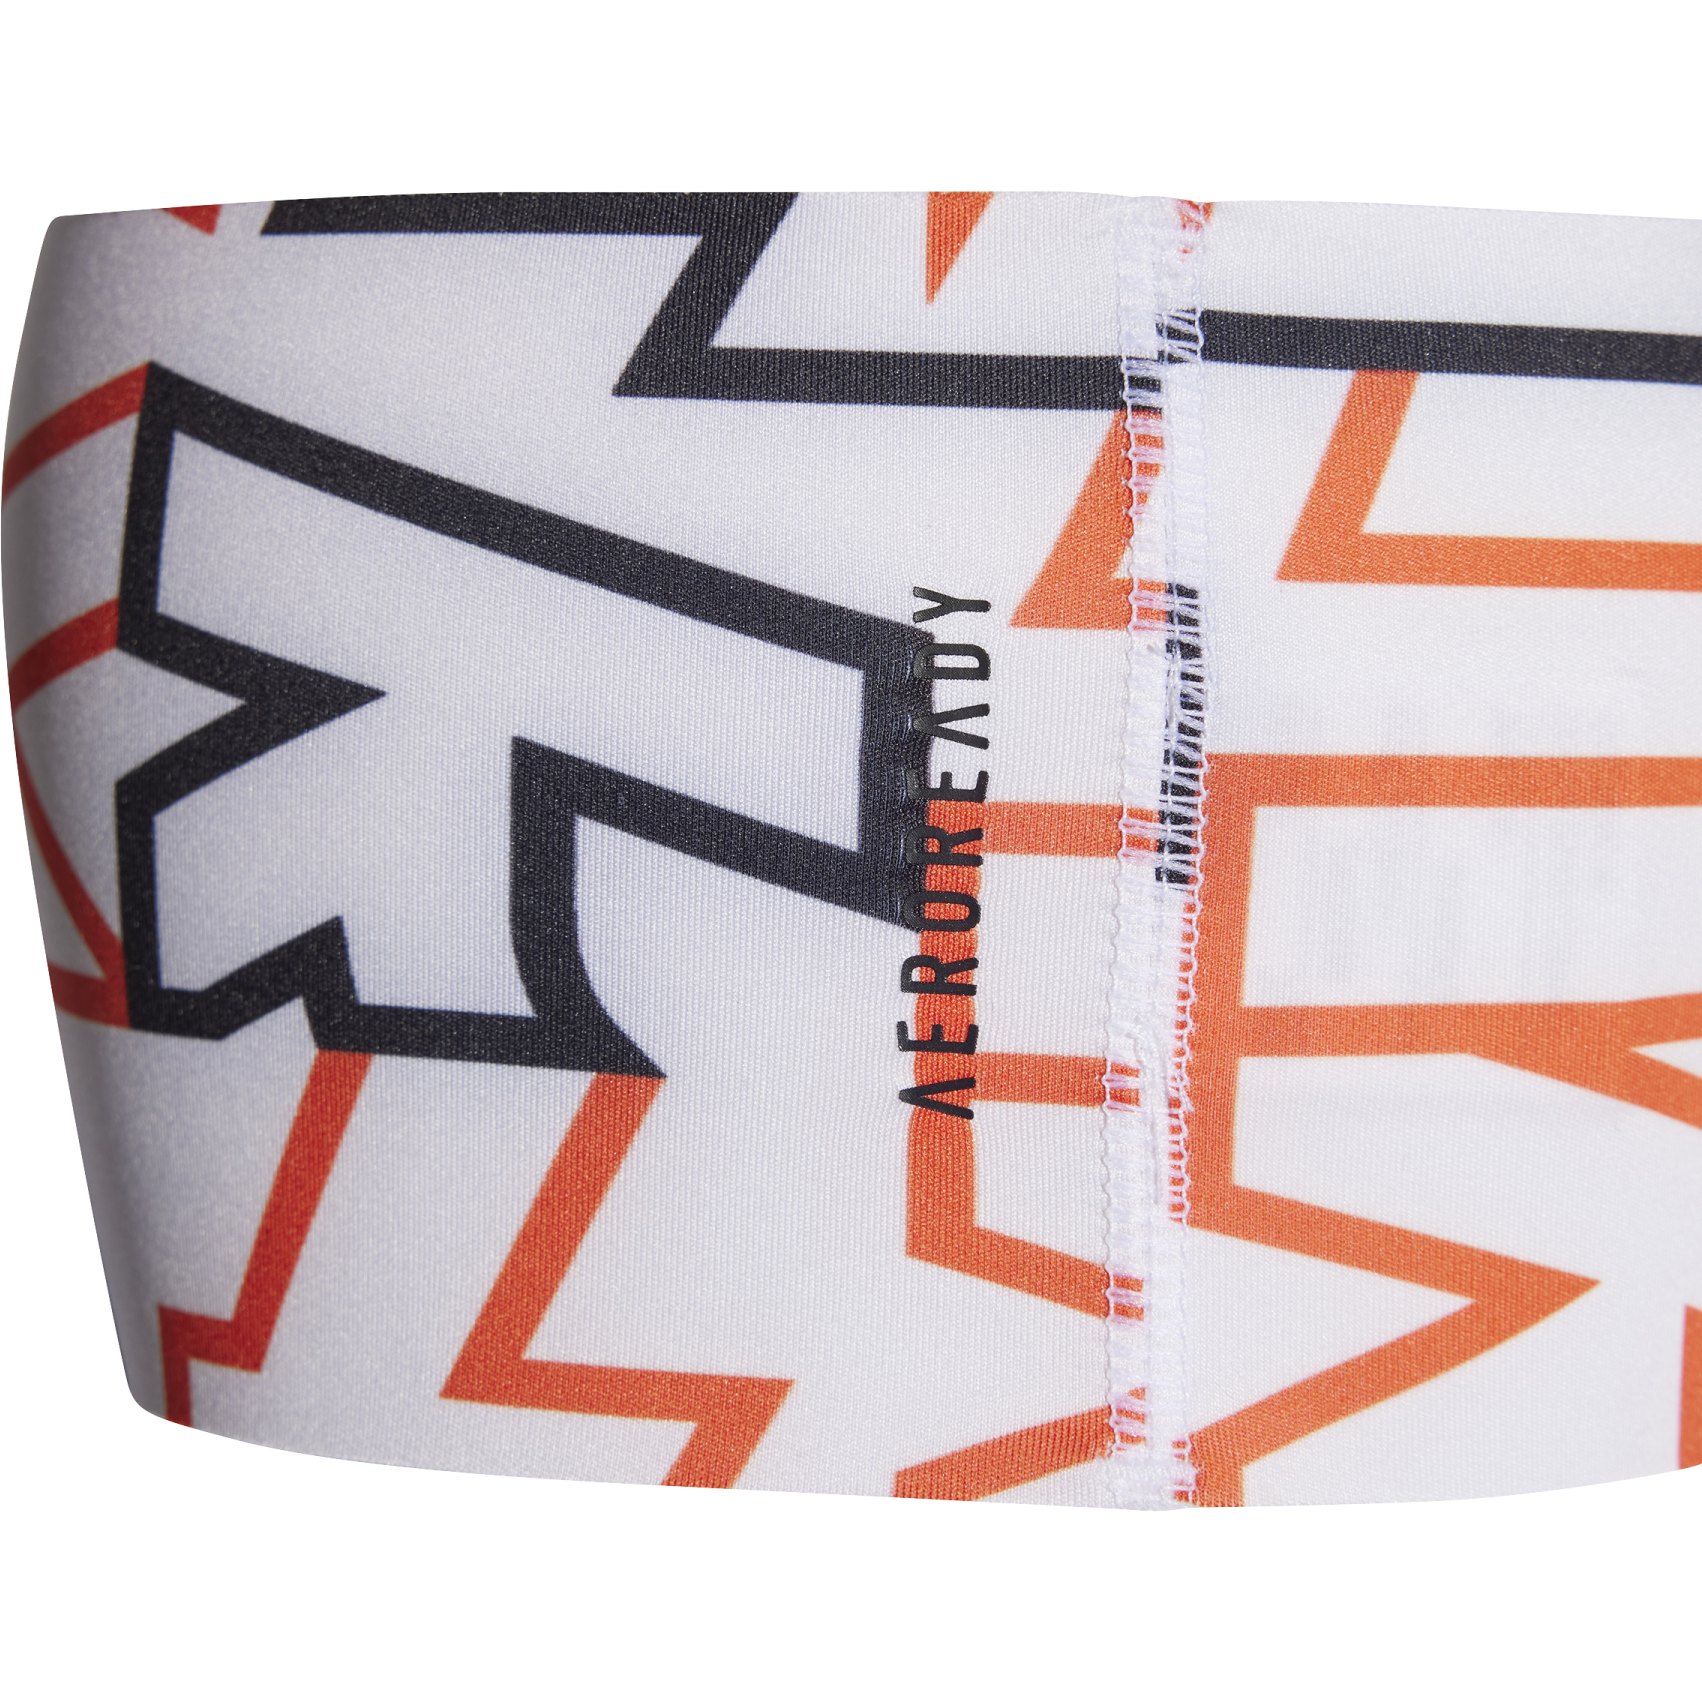 TERREX - IN4643 Graphic impact Stirnband orange/black AEROREADY adidas white/semi